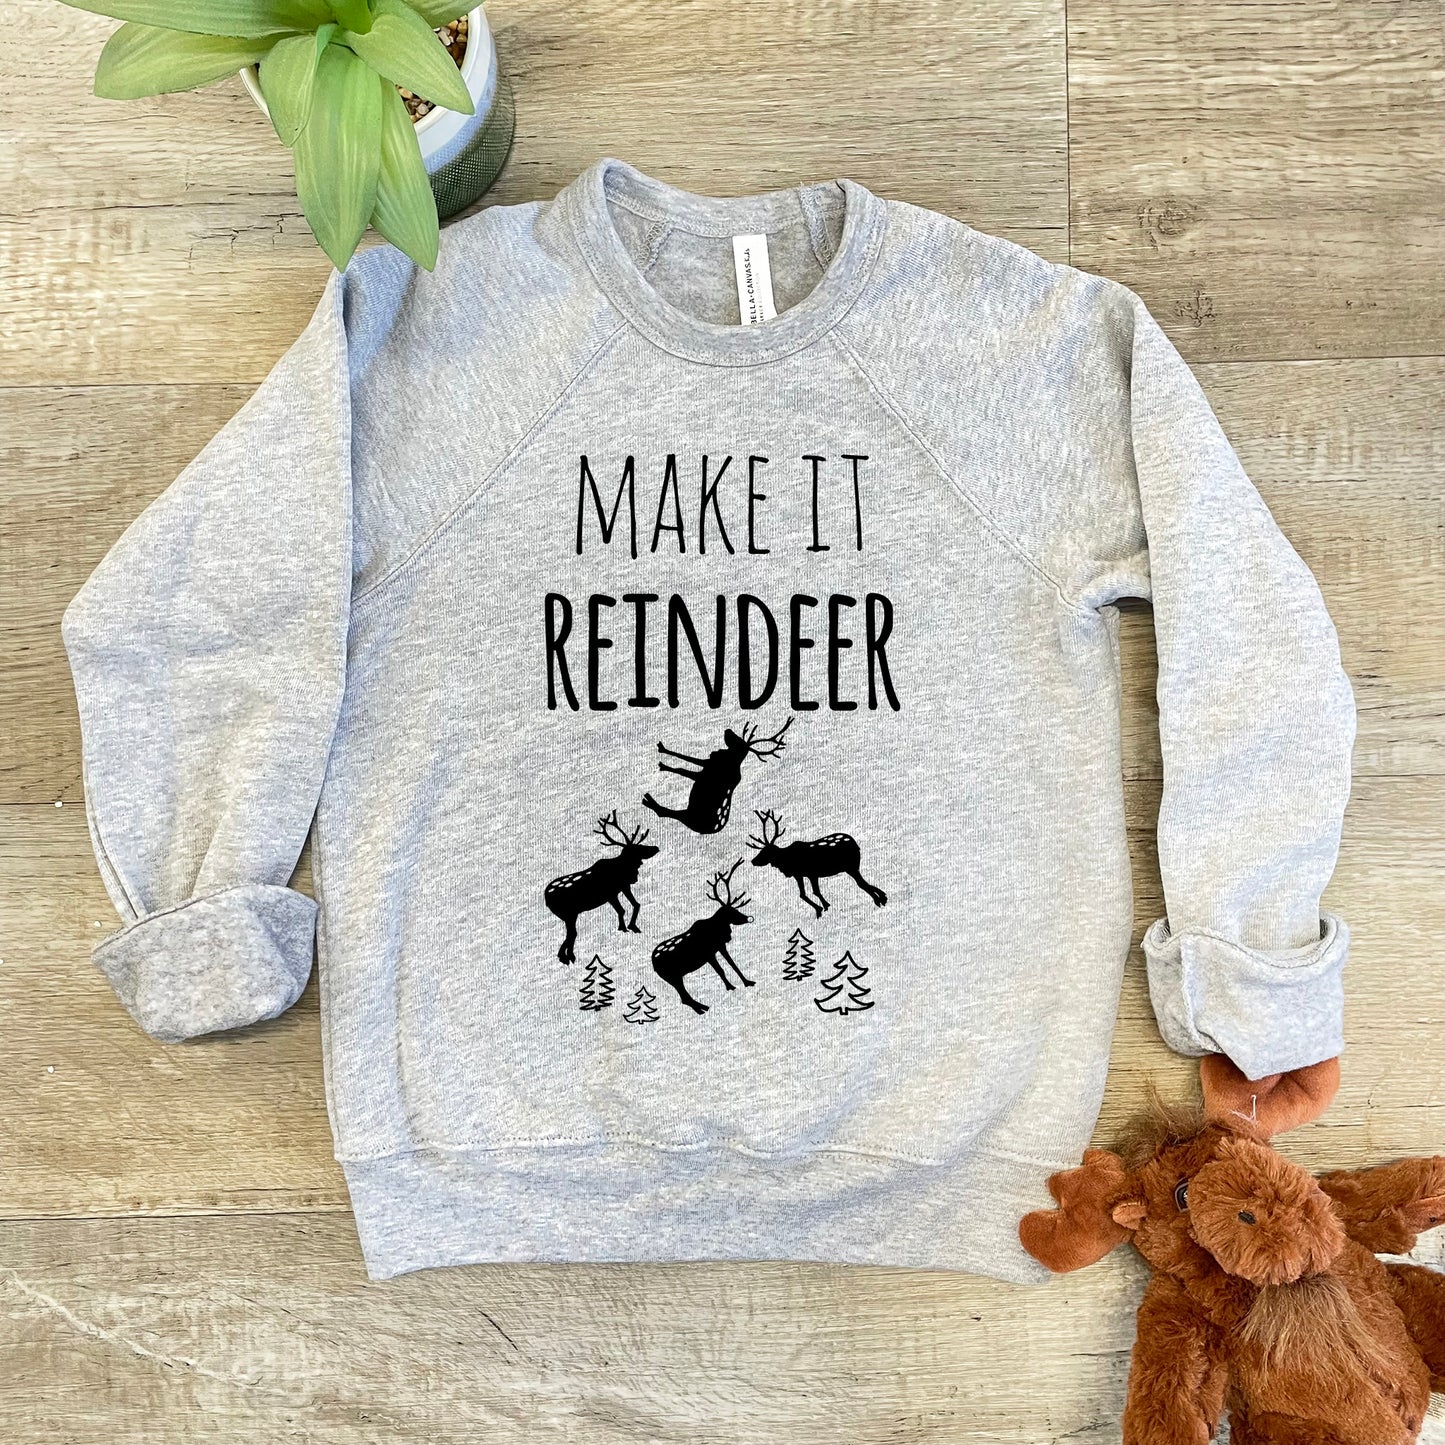 Make It Reindeer - Kid's Sweatshirt - Heather Gray or Mauve